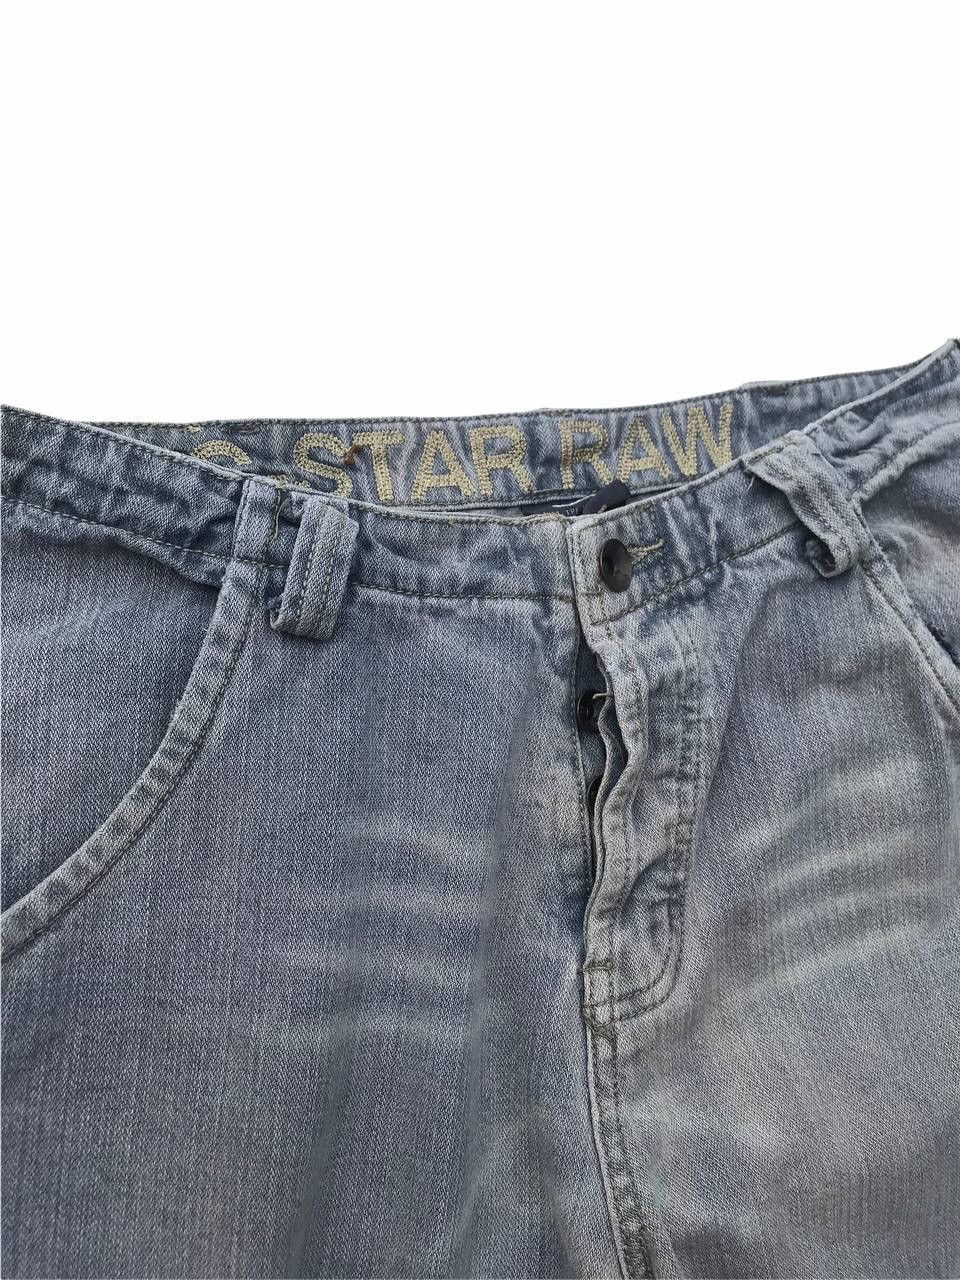 Gstar Gstar Denim Cargo Multipocket Streetwear Fashion Pants Size US 31 - 3 Thumbnail